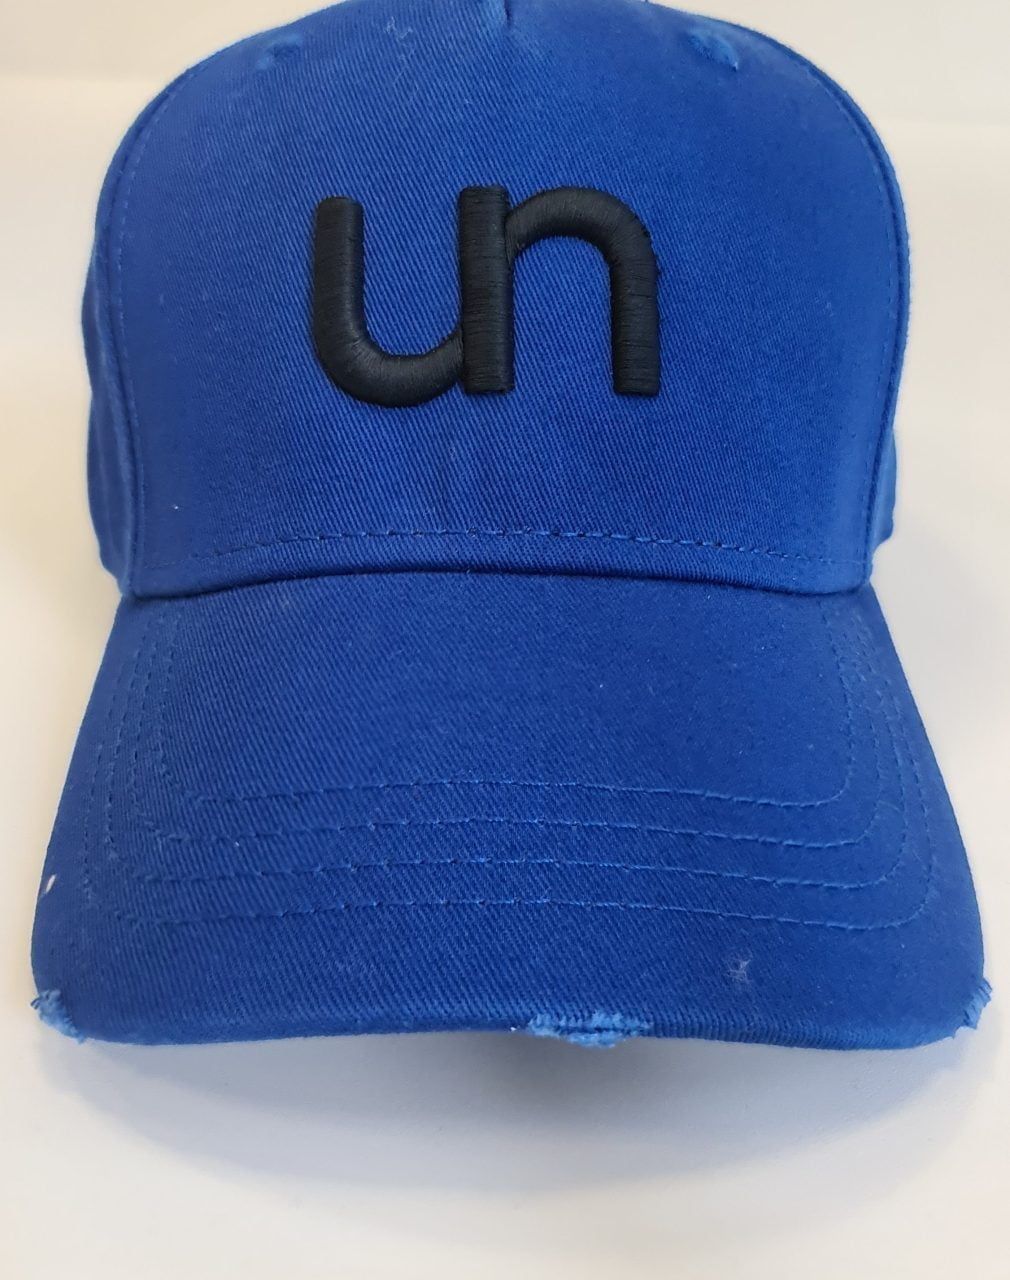 mėlyna unlabel kepurė